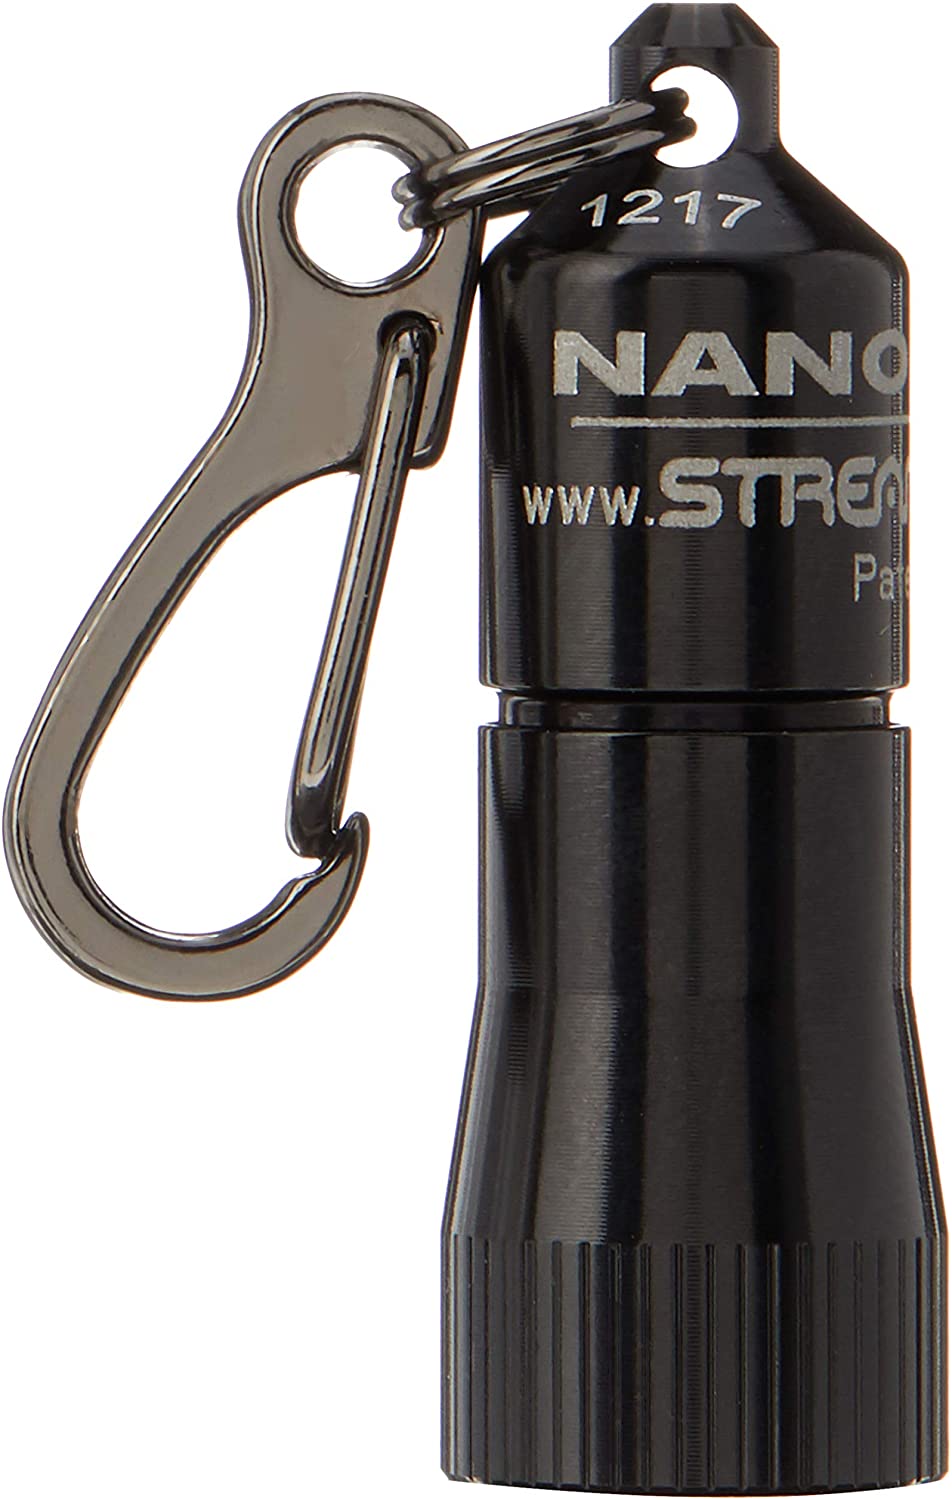 Streamlight 73001 Nano Light Miniature Keychain LED Flashlight, Black - 10 Lumens